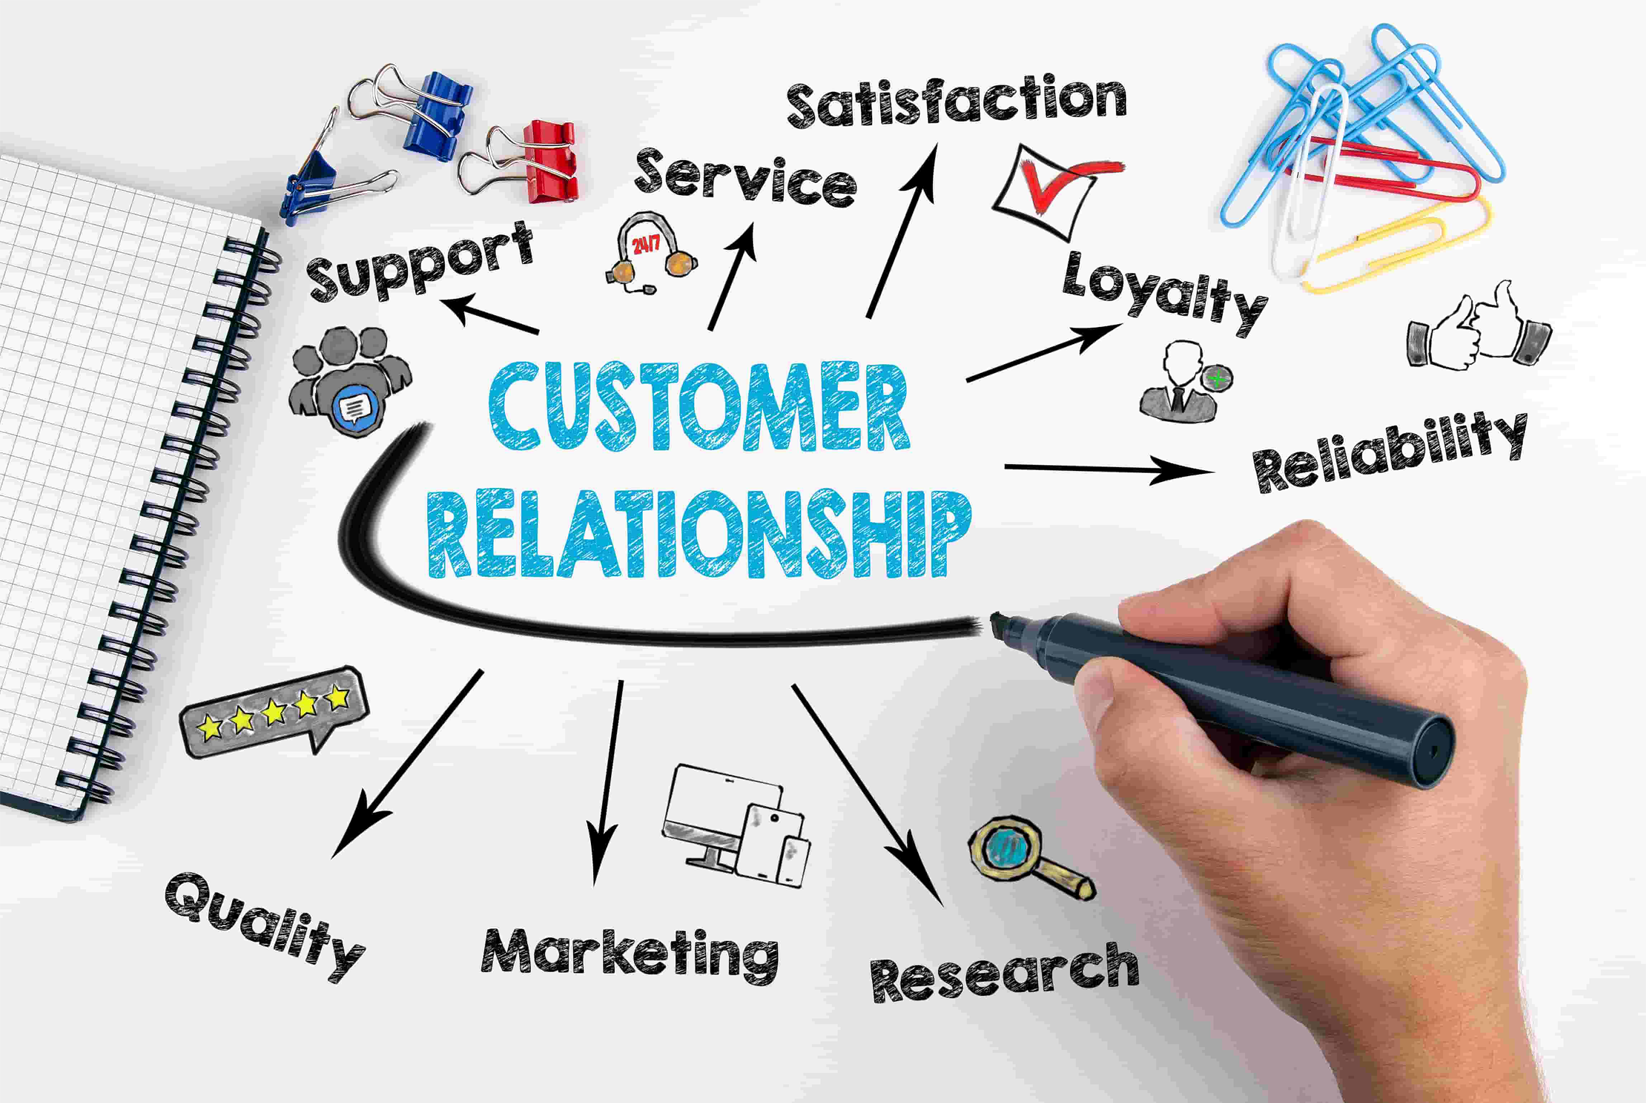 Customer Relationship Management | Customer relationships, Relationship